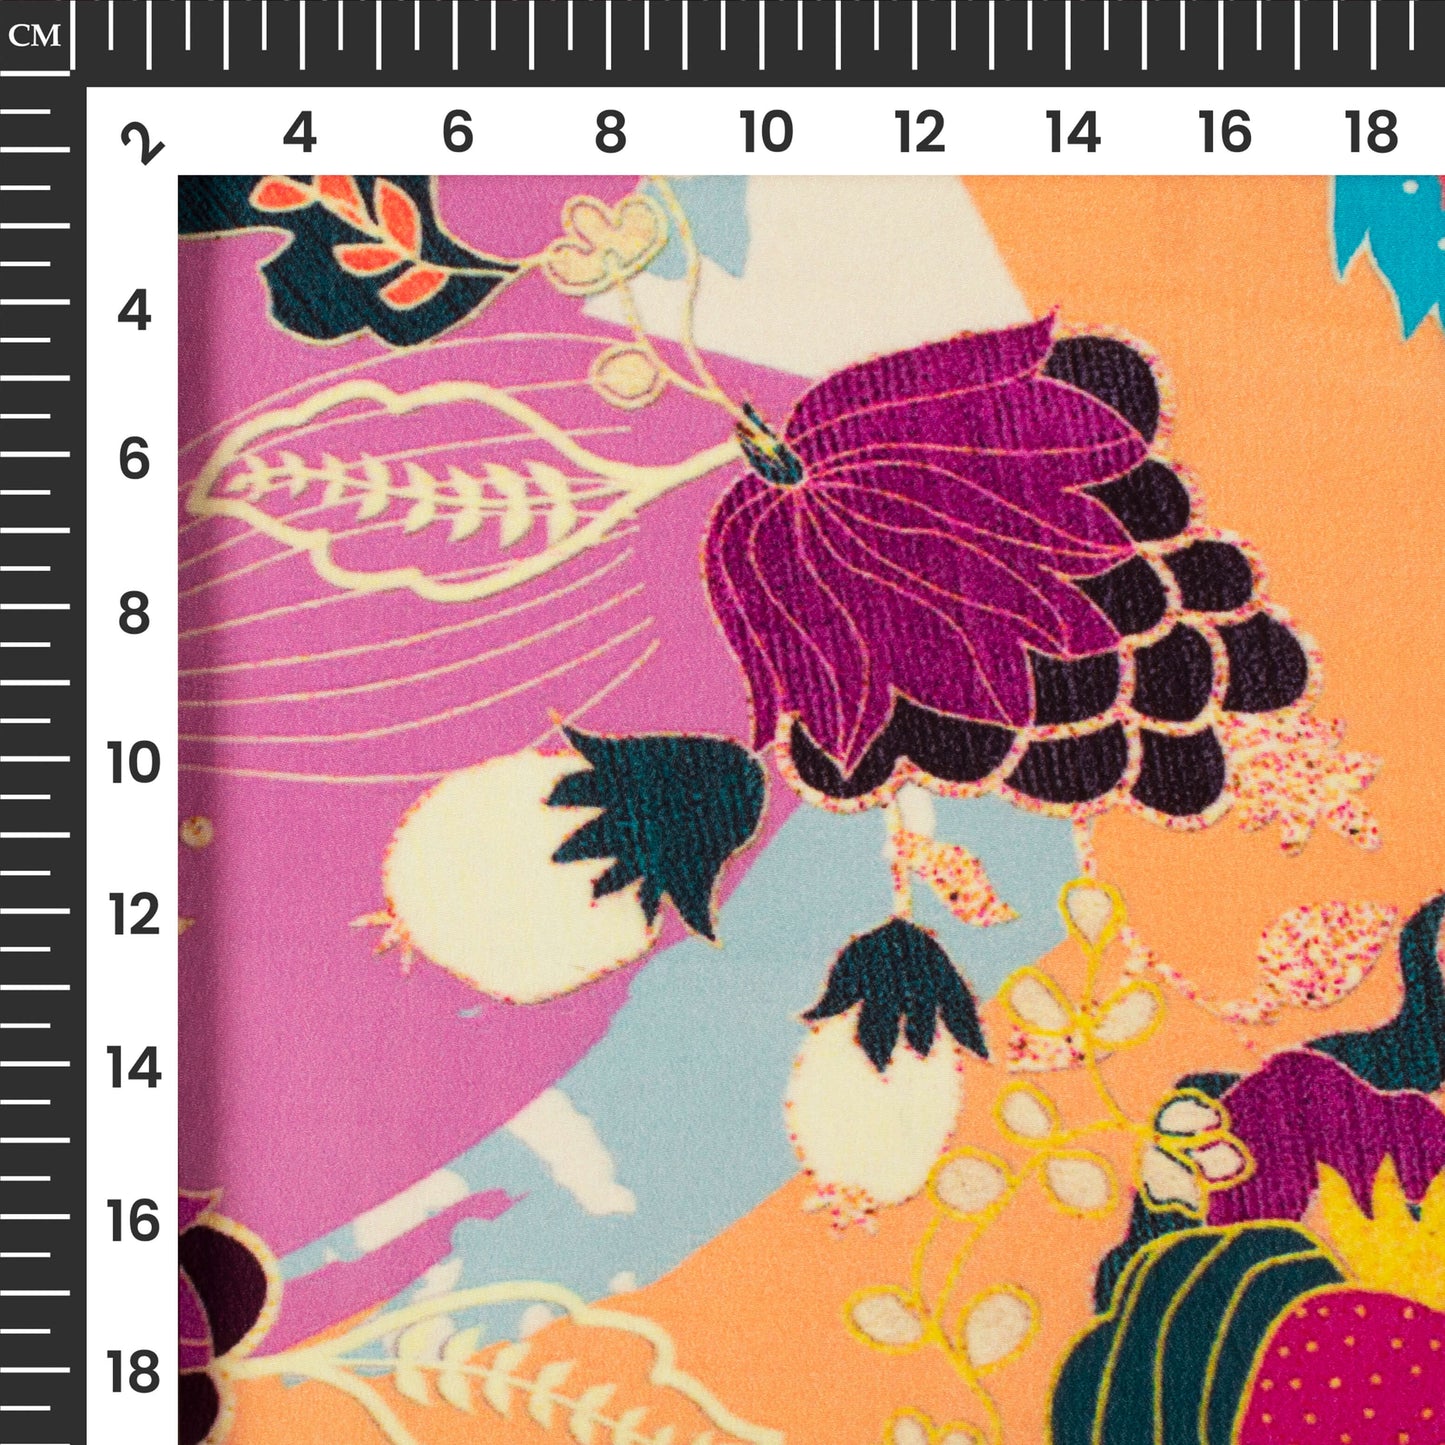 Heather Purple And Peach Floral Digital Print Viscose Natural Crepe Fabric